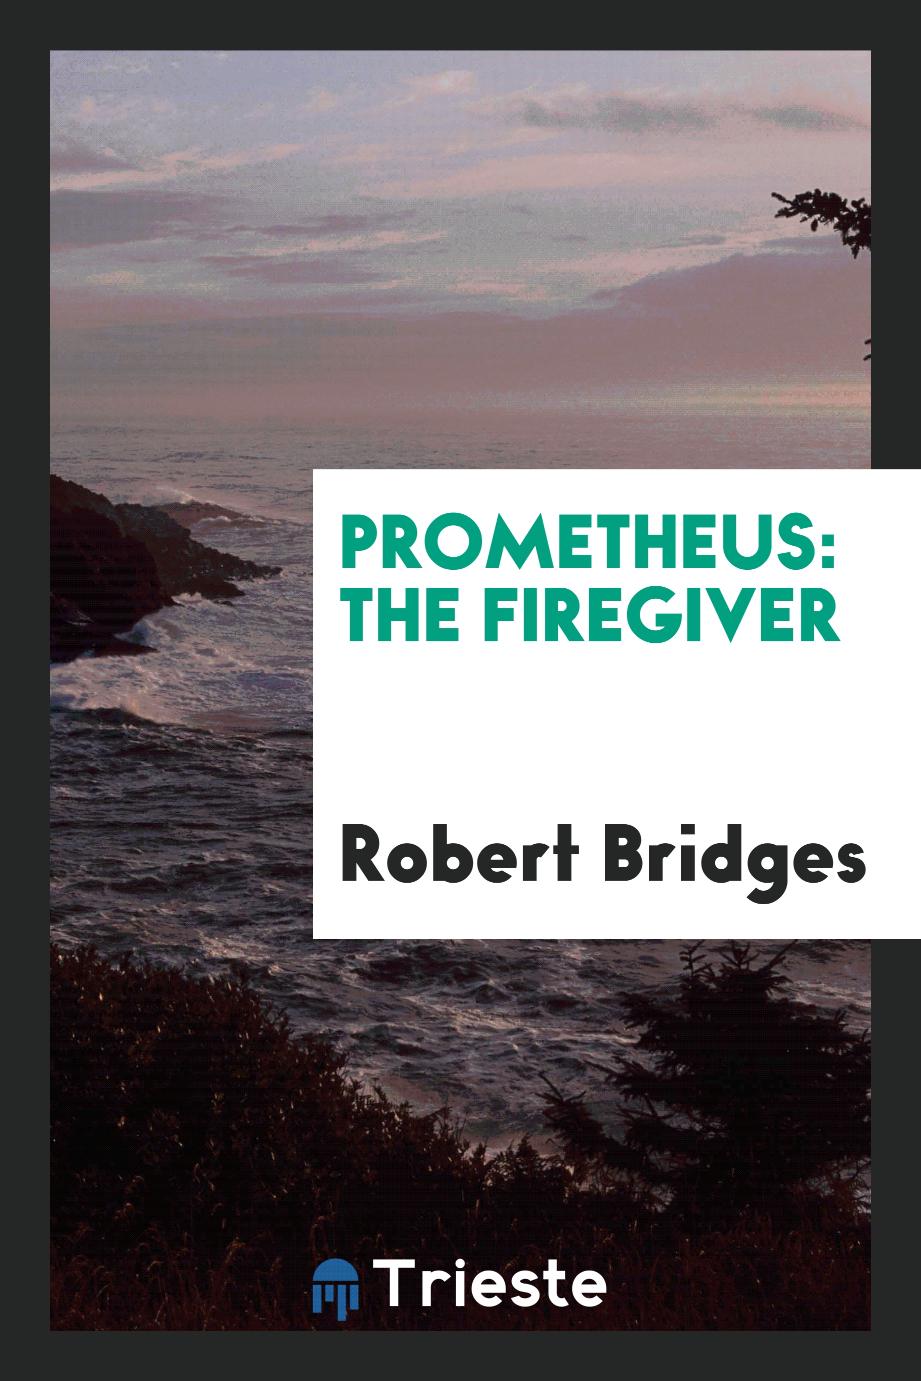 Prometheus: The Firegiver